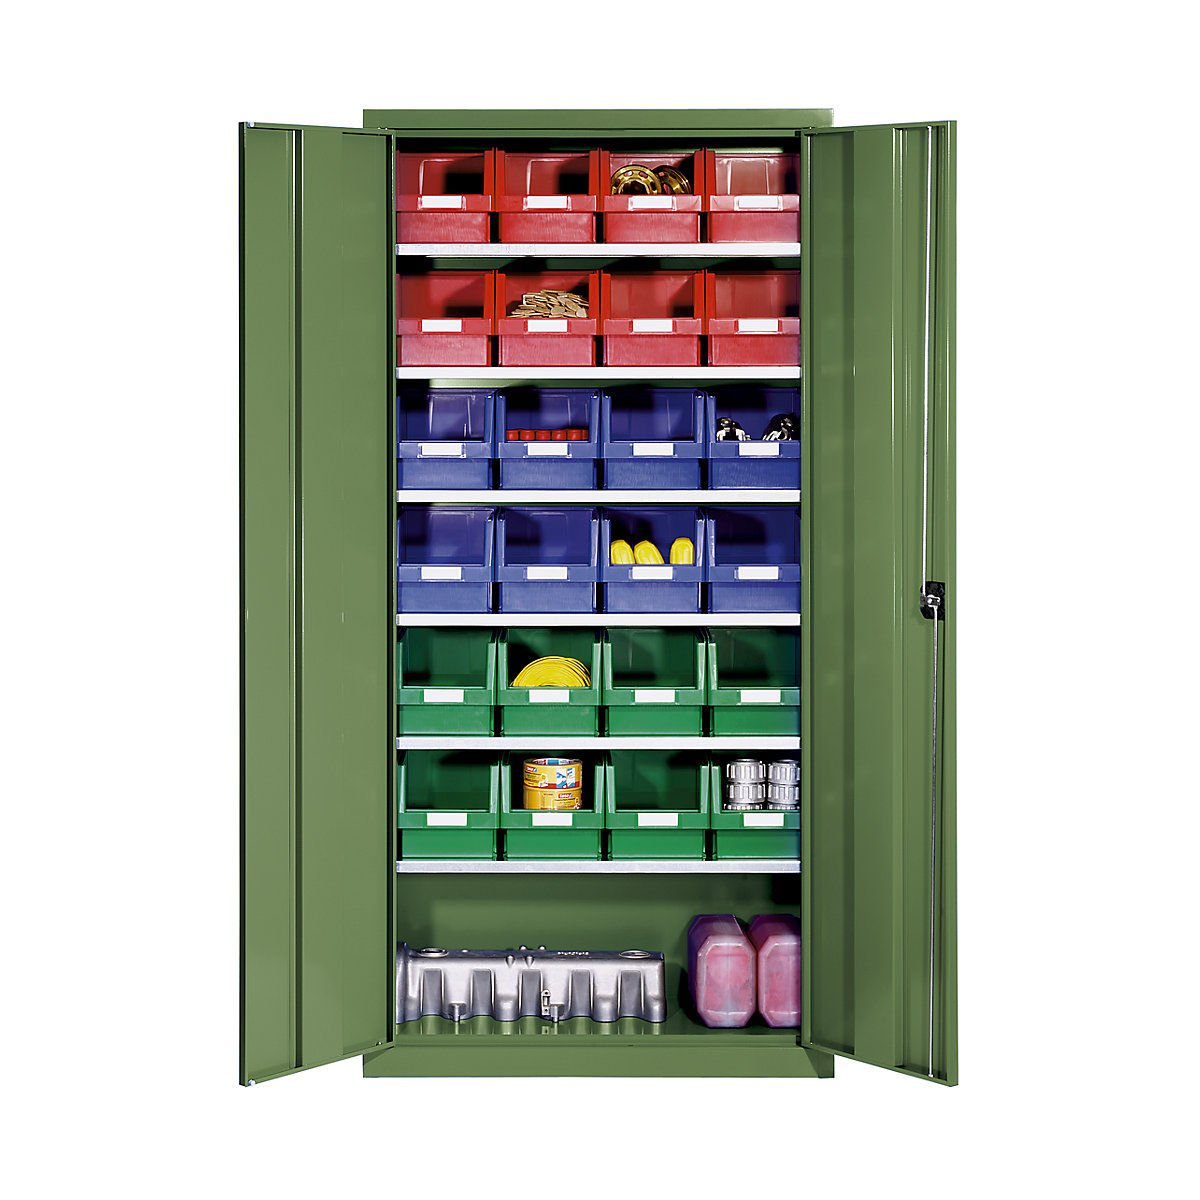 Storage cupboard made of sheet steel – eurokraft pro, with 24 open fronted storage bins, reseda green RAL 6011-4